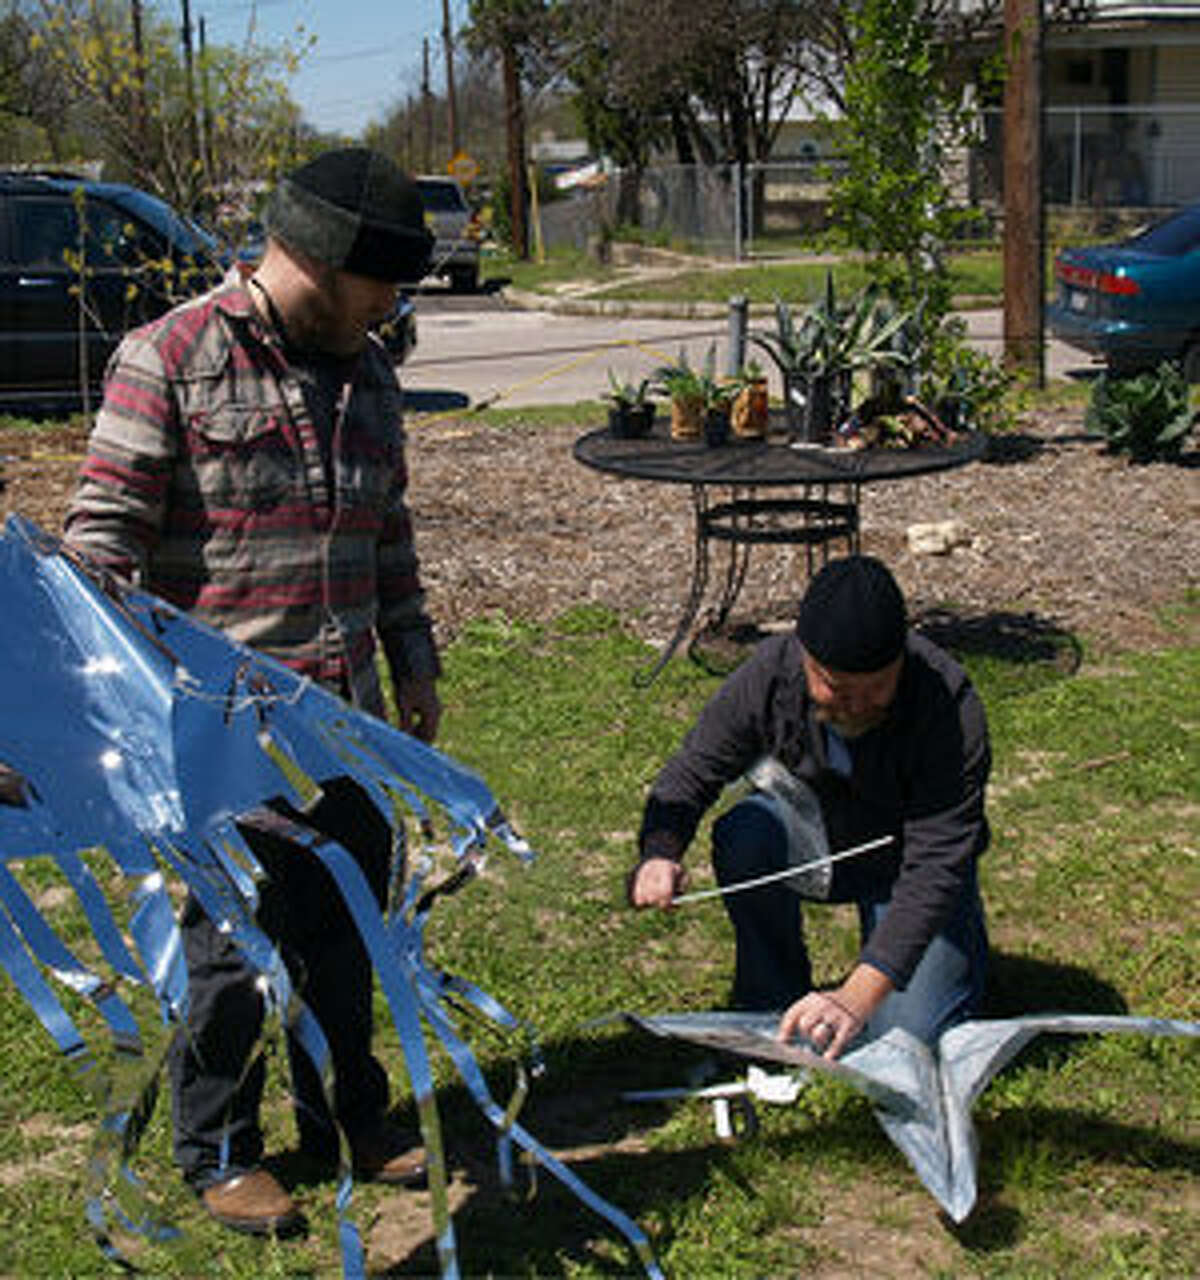 Chris Sauter and Rick Frederick assemble their kites at the Kite Festival at Pittman-Sullivan Park.